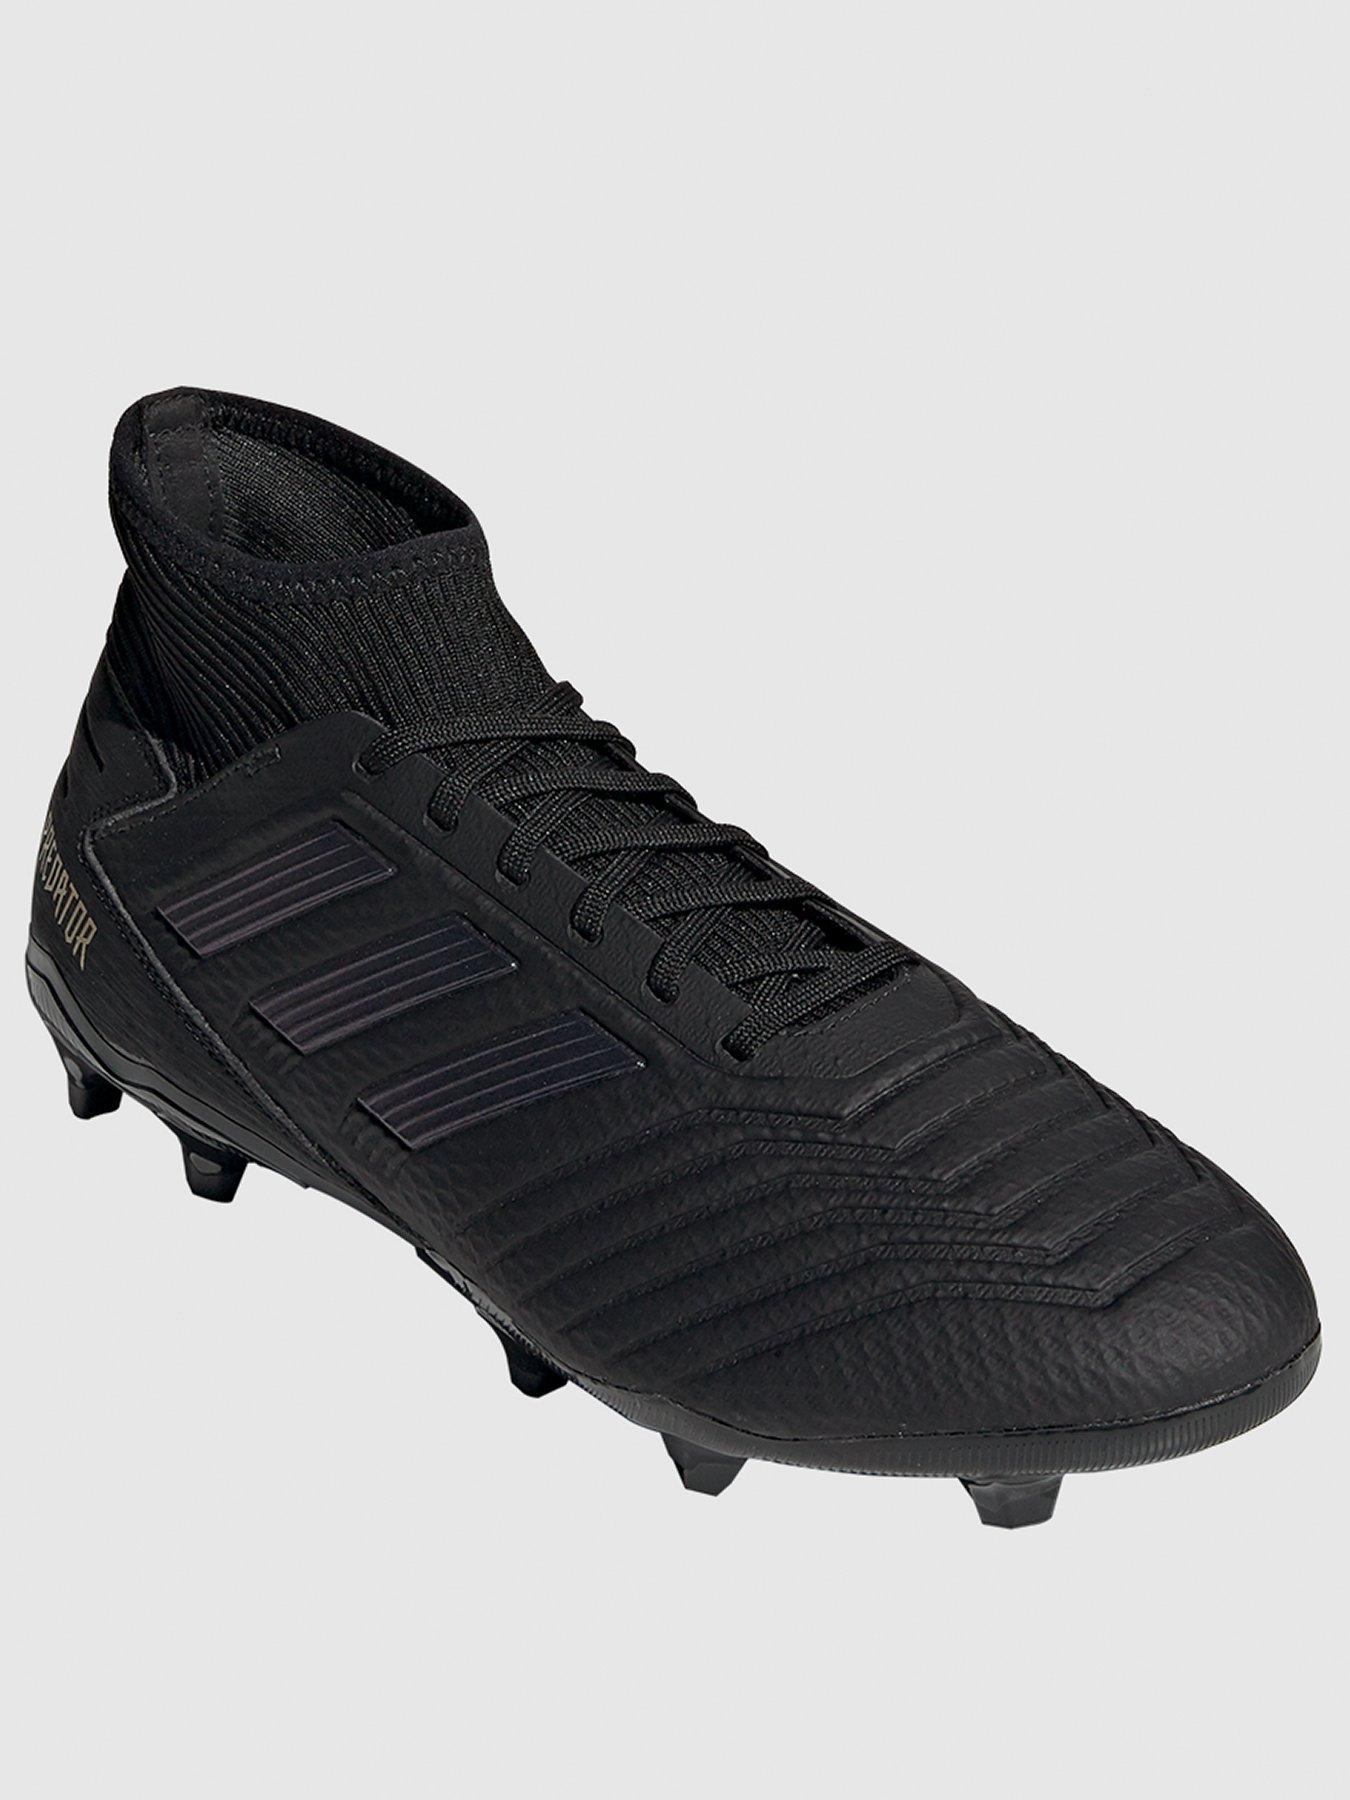 Adidas Predator 19 3 Firm Ground Football Boot Black Very Co Uk